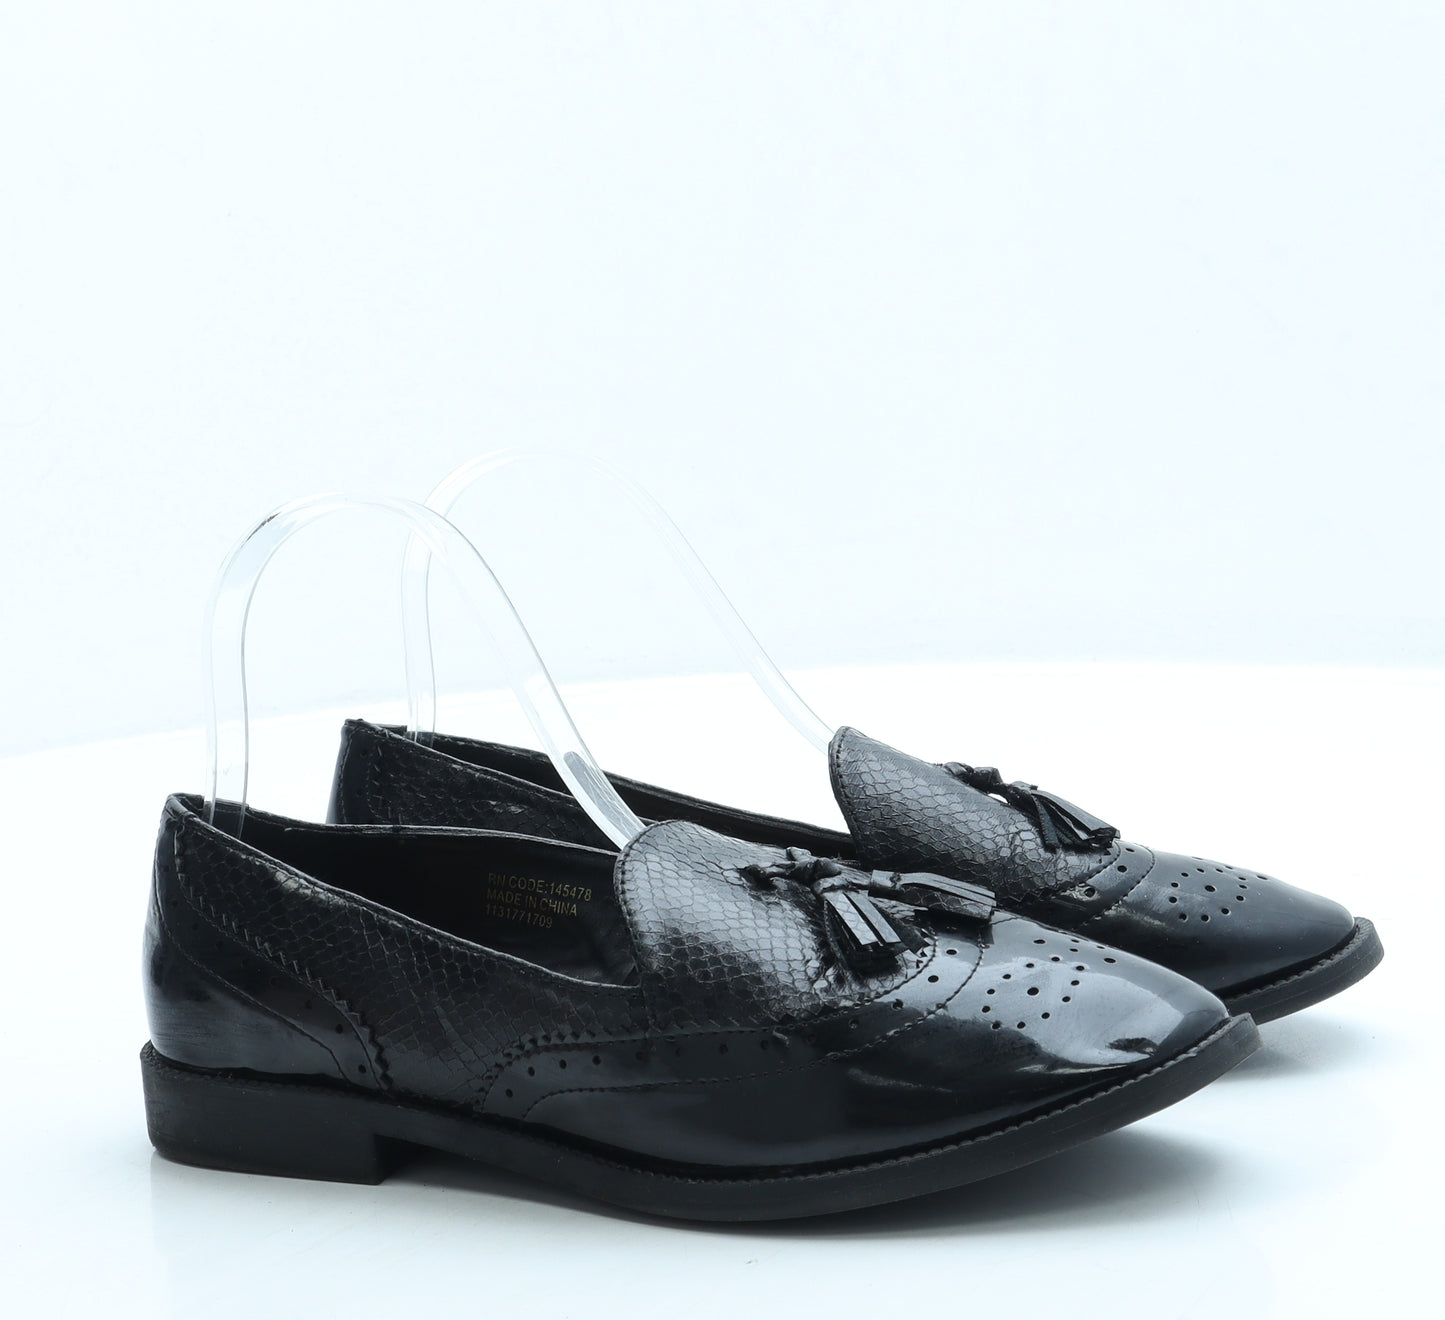 Primark Womens Black Leather Loafer Flat UK 5 38 US 7 - Wide Fit